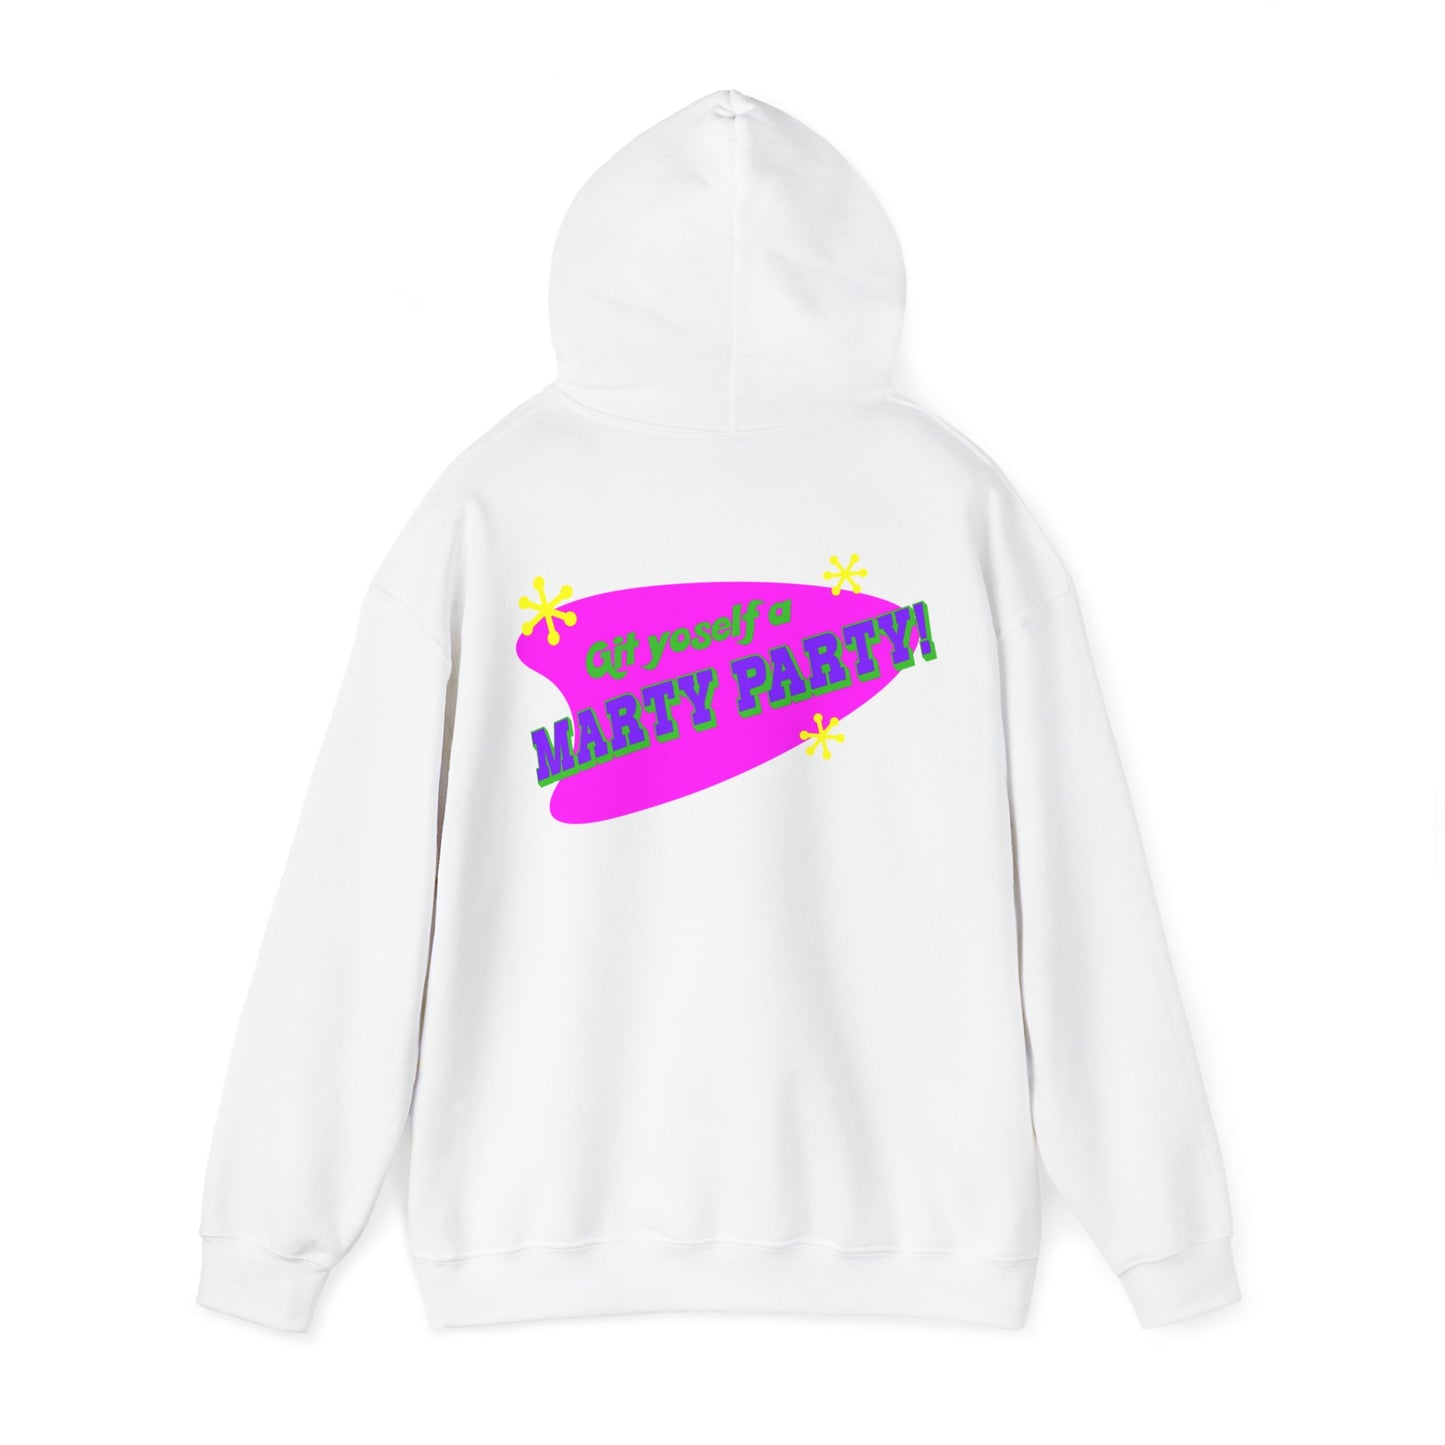 Marty Party Unisex Heavy Blend Hooded Sweatshirt